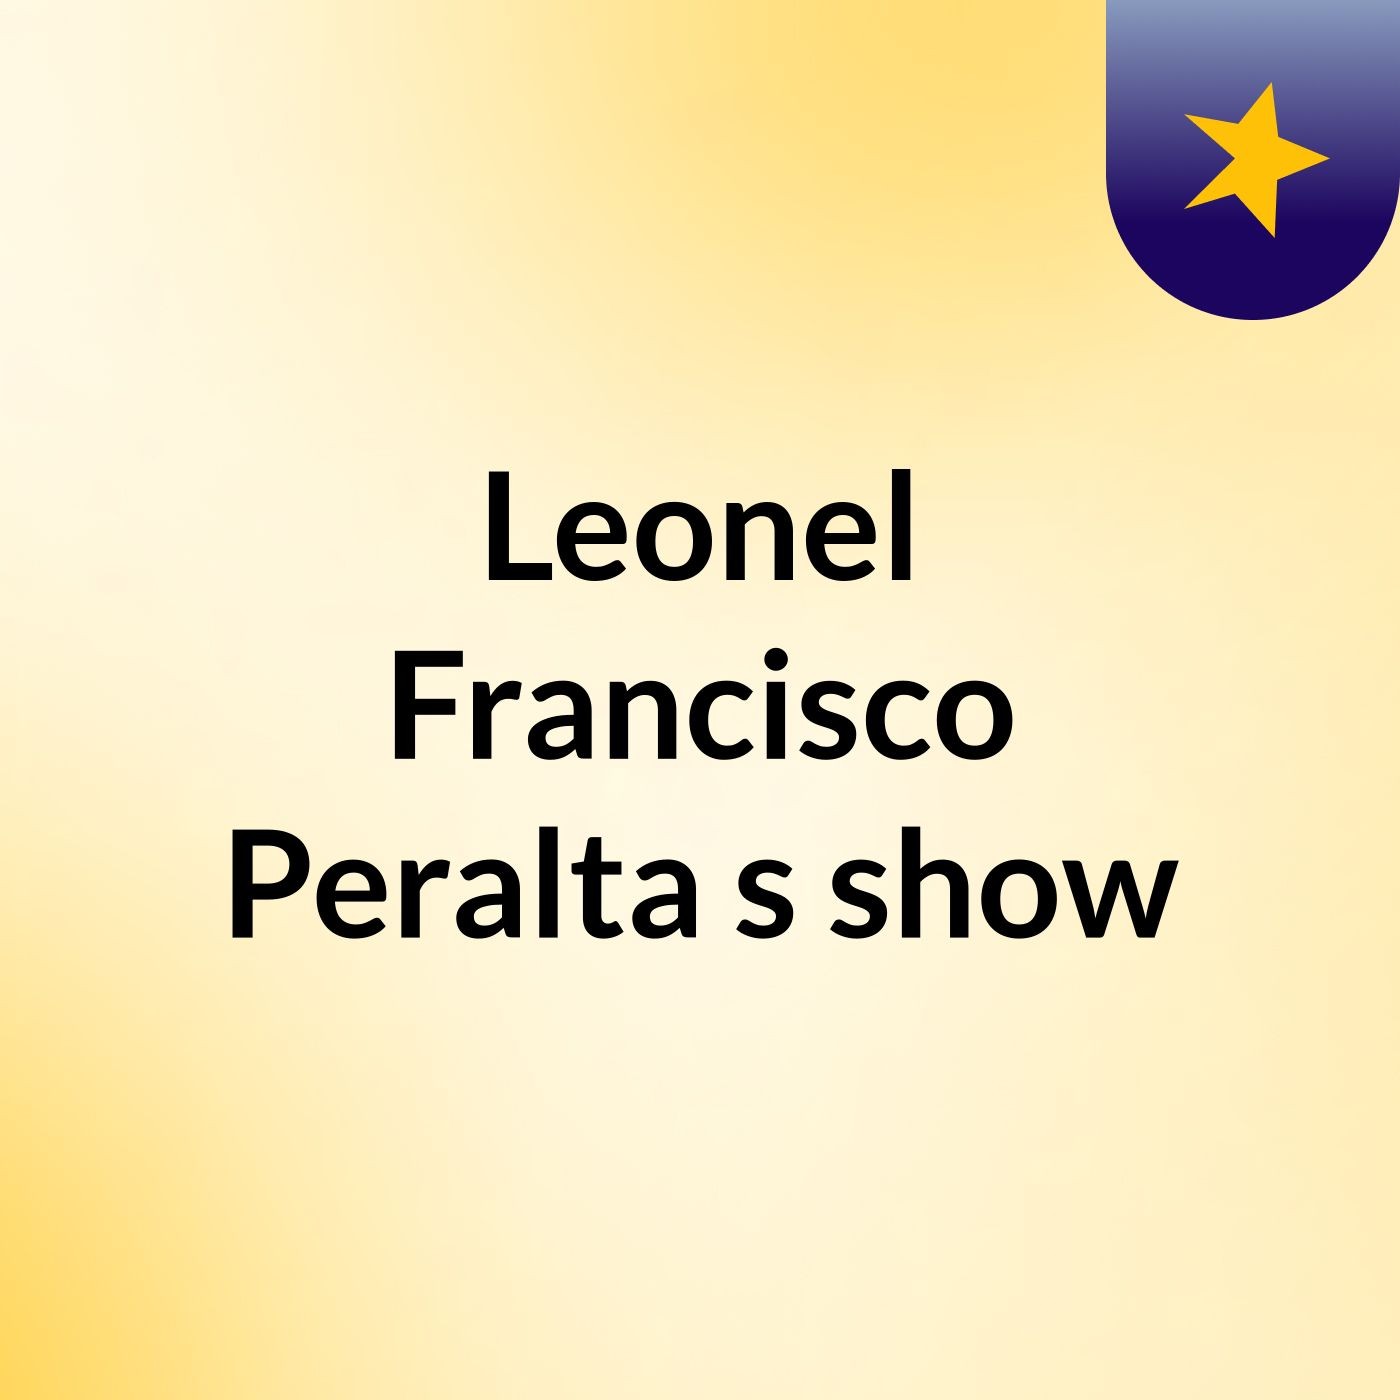 Leonel Francisco Peralta's show